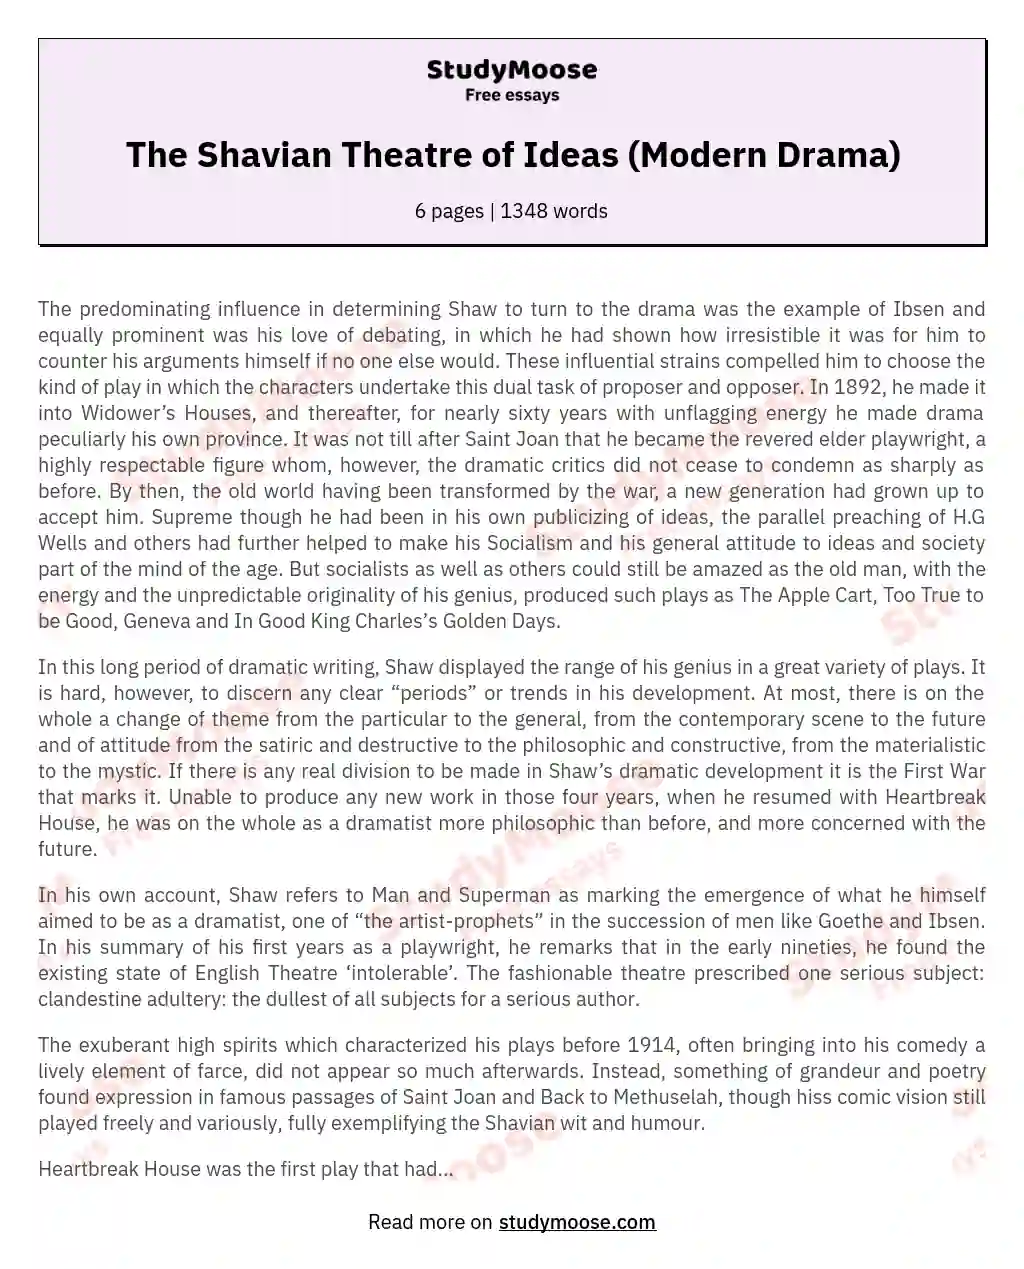 The Shavian Theatre of Ideas (Modern Drama) essay